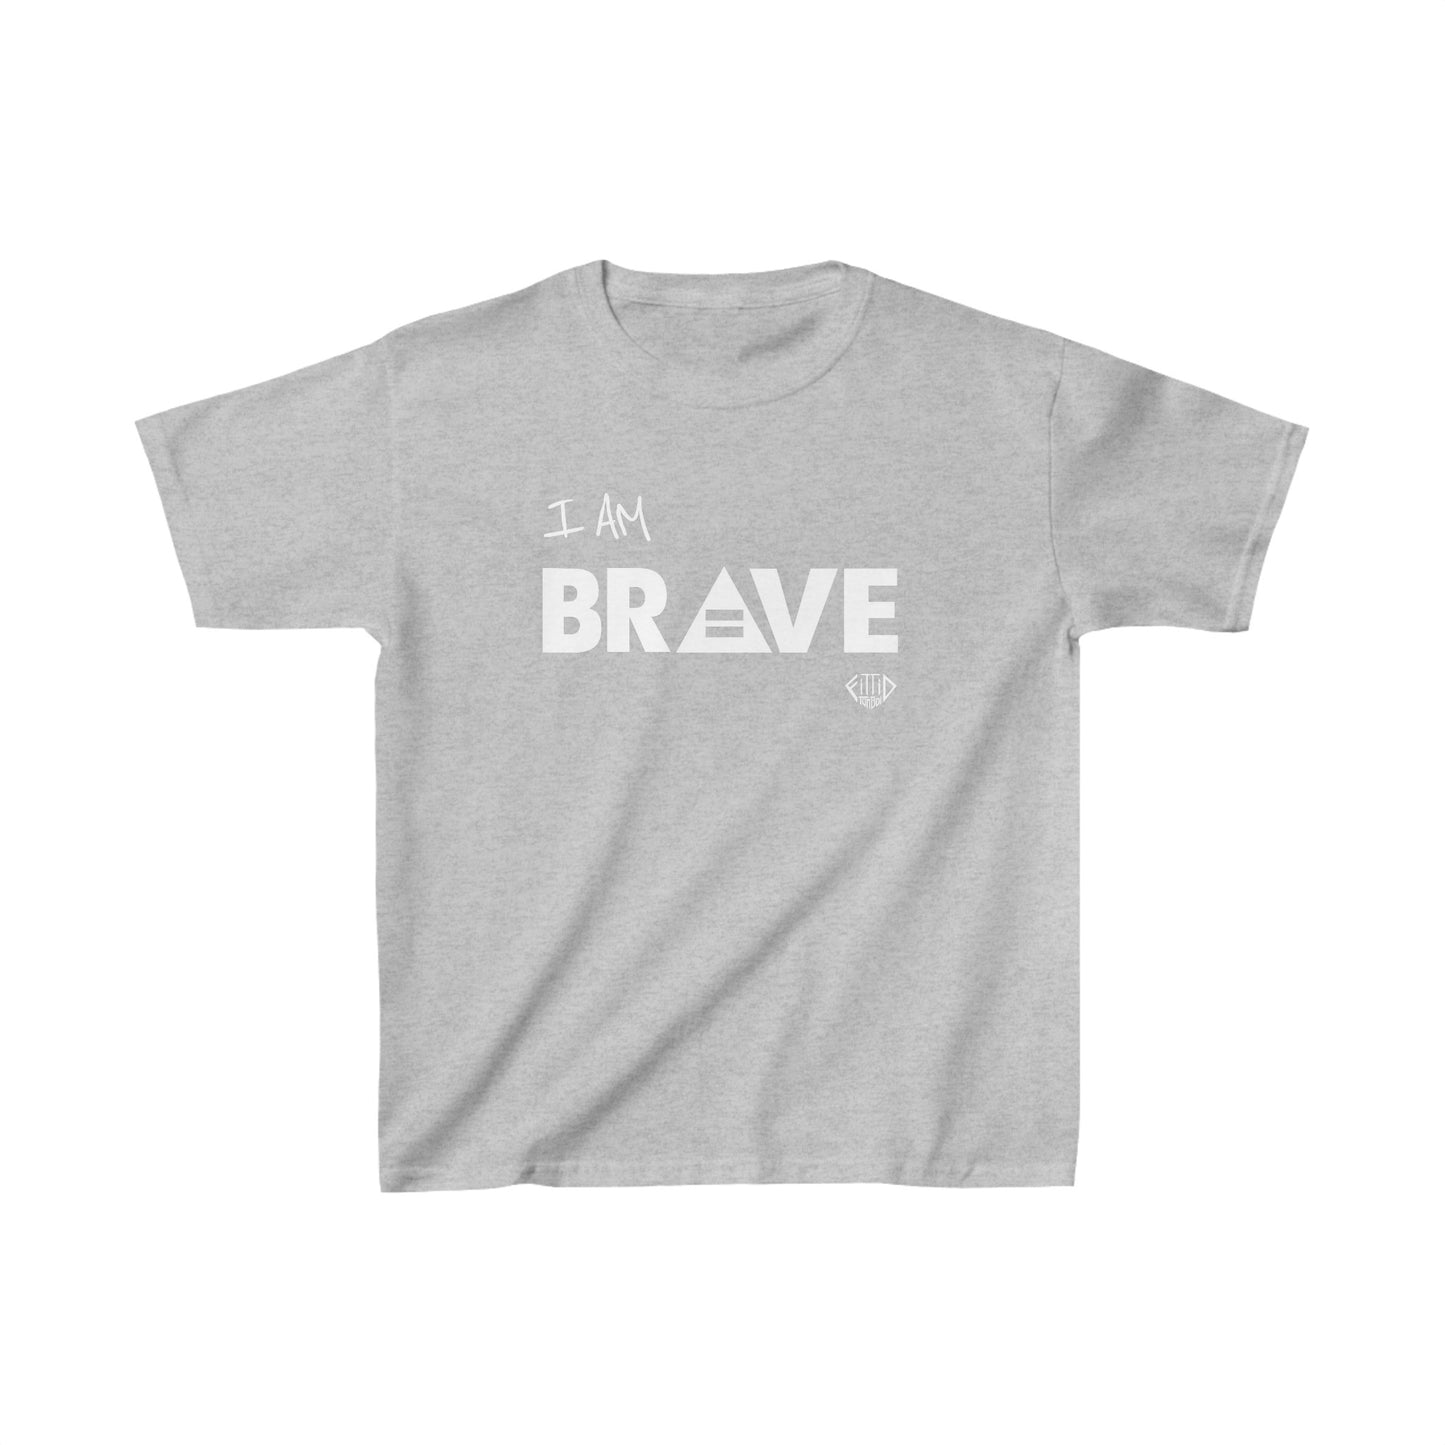 I AM BRAVE Kids T-shirt